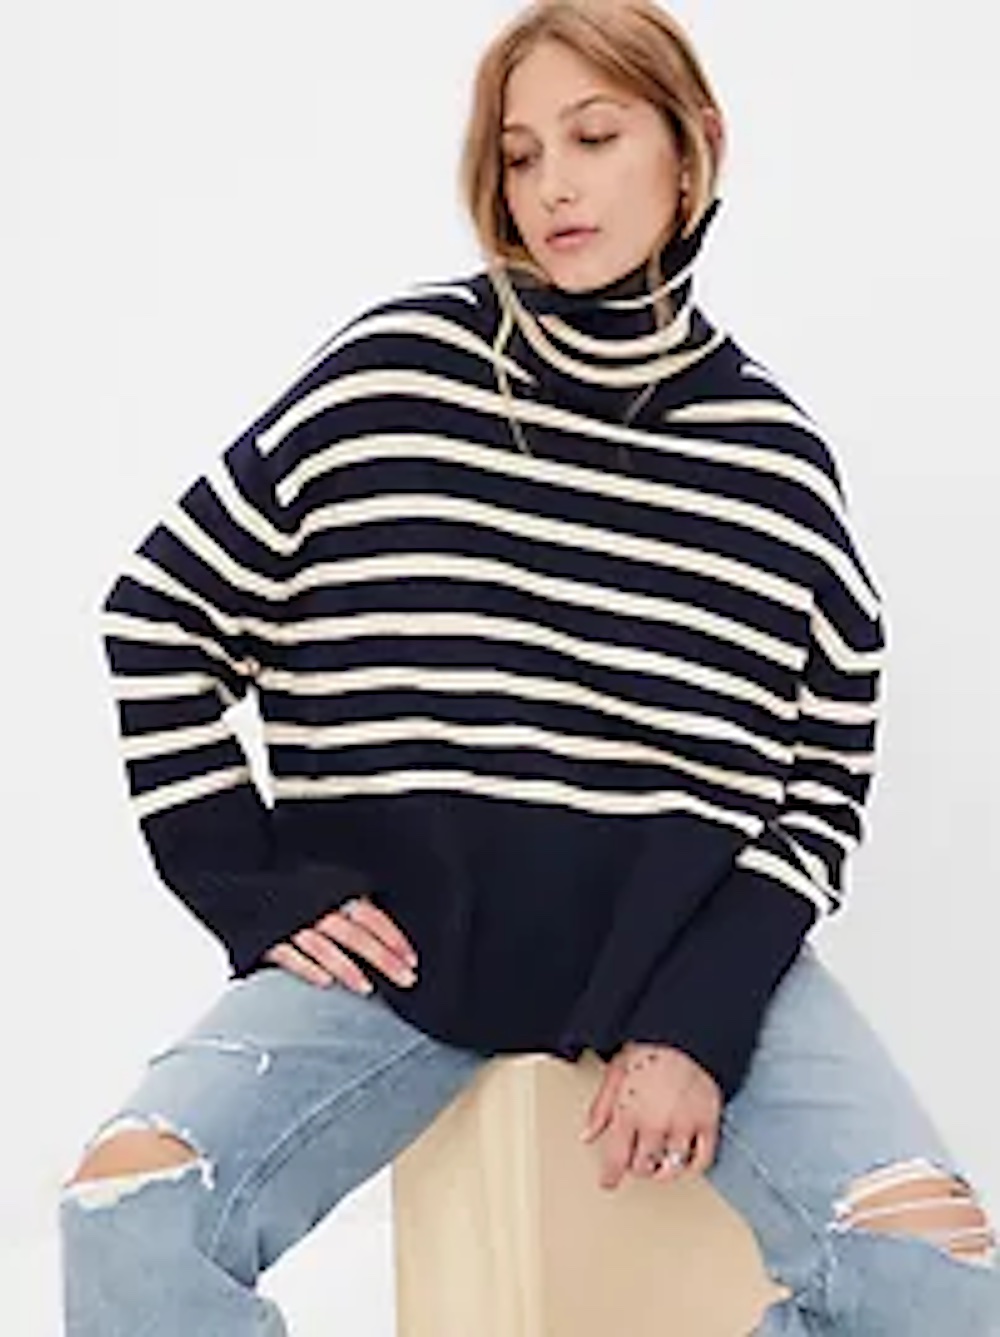 Gap sweater